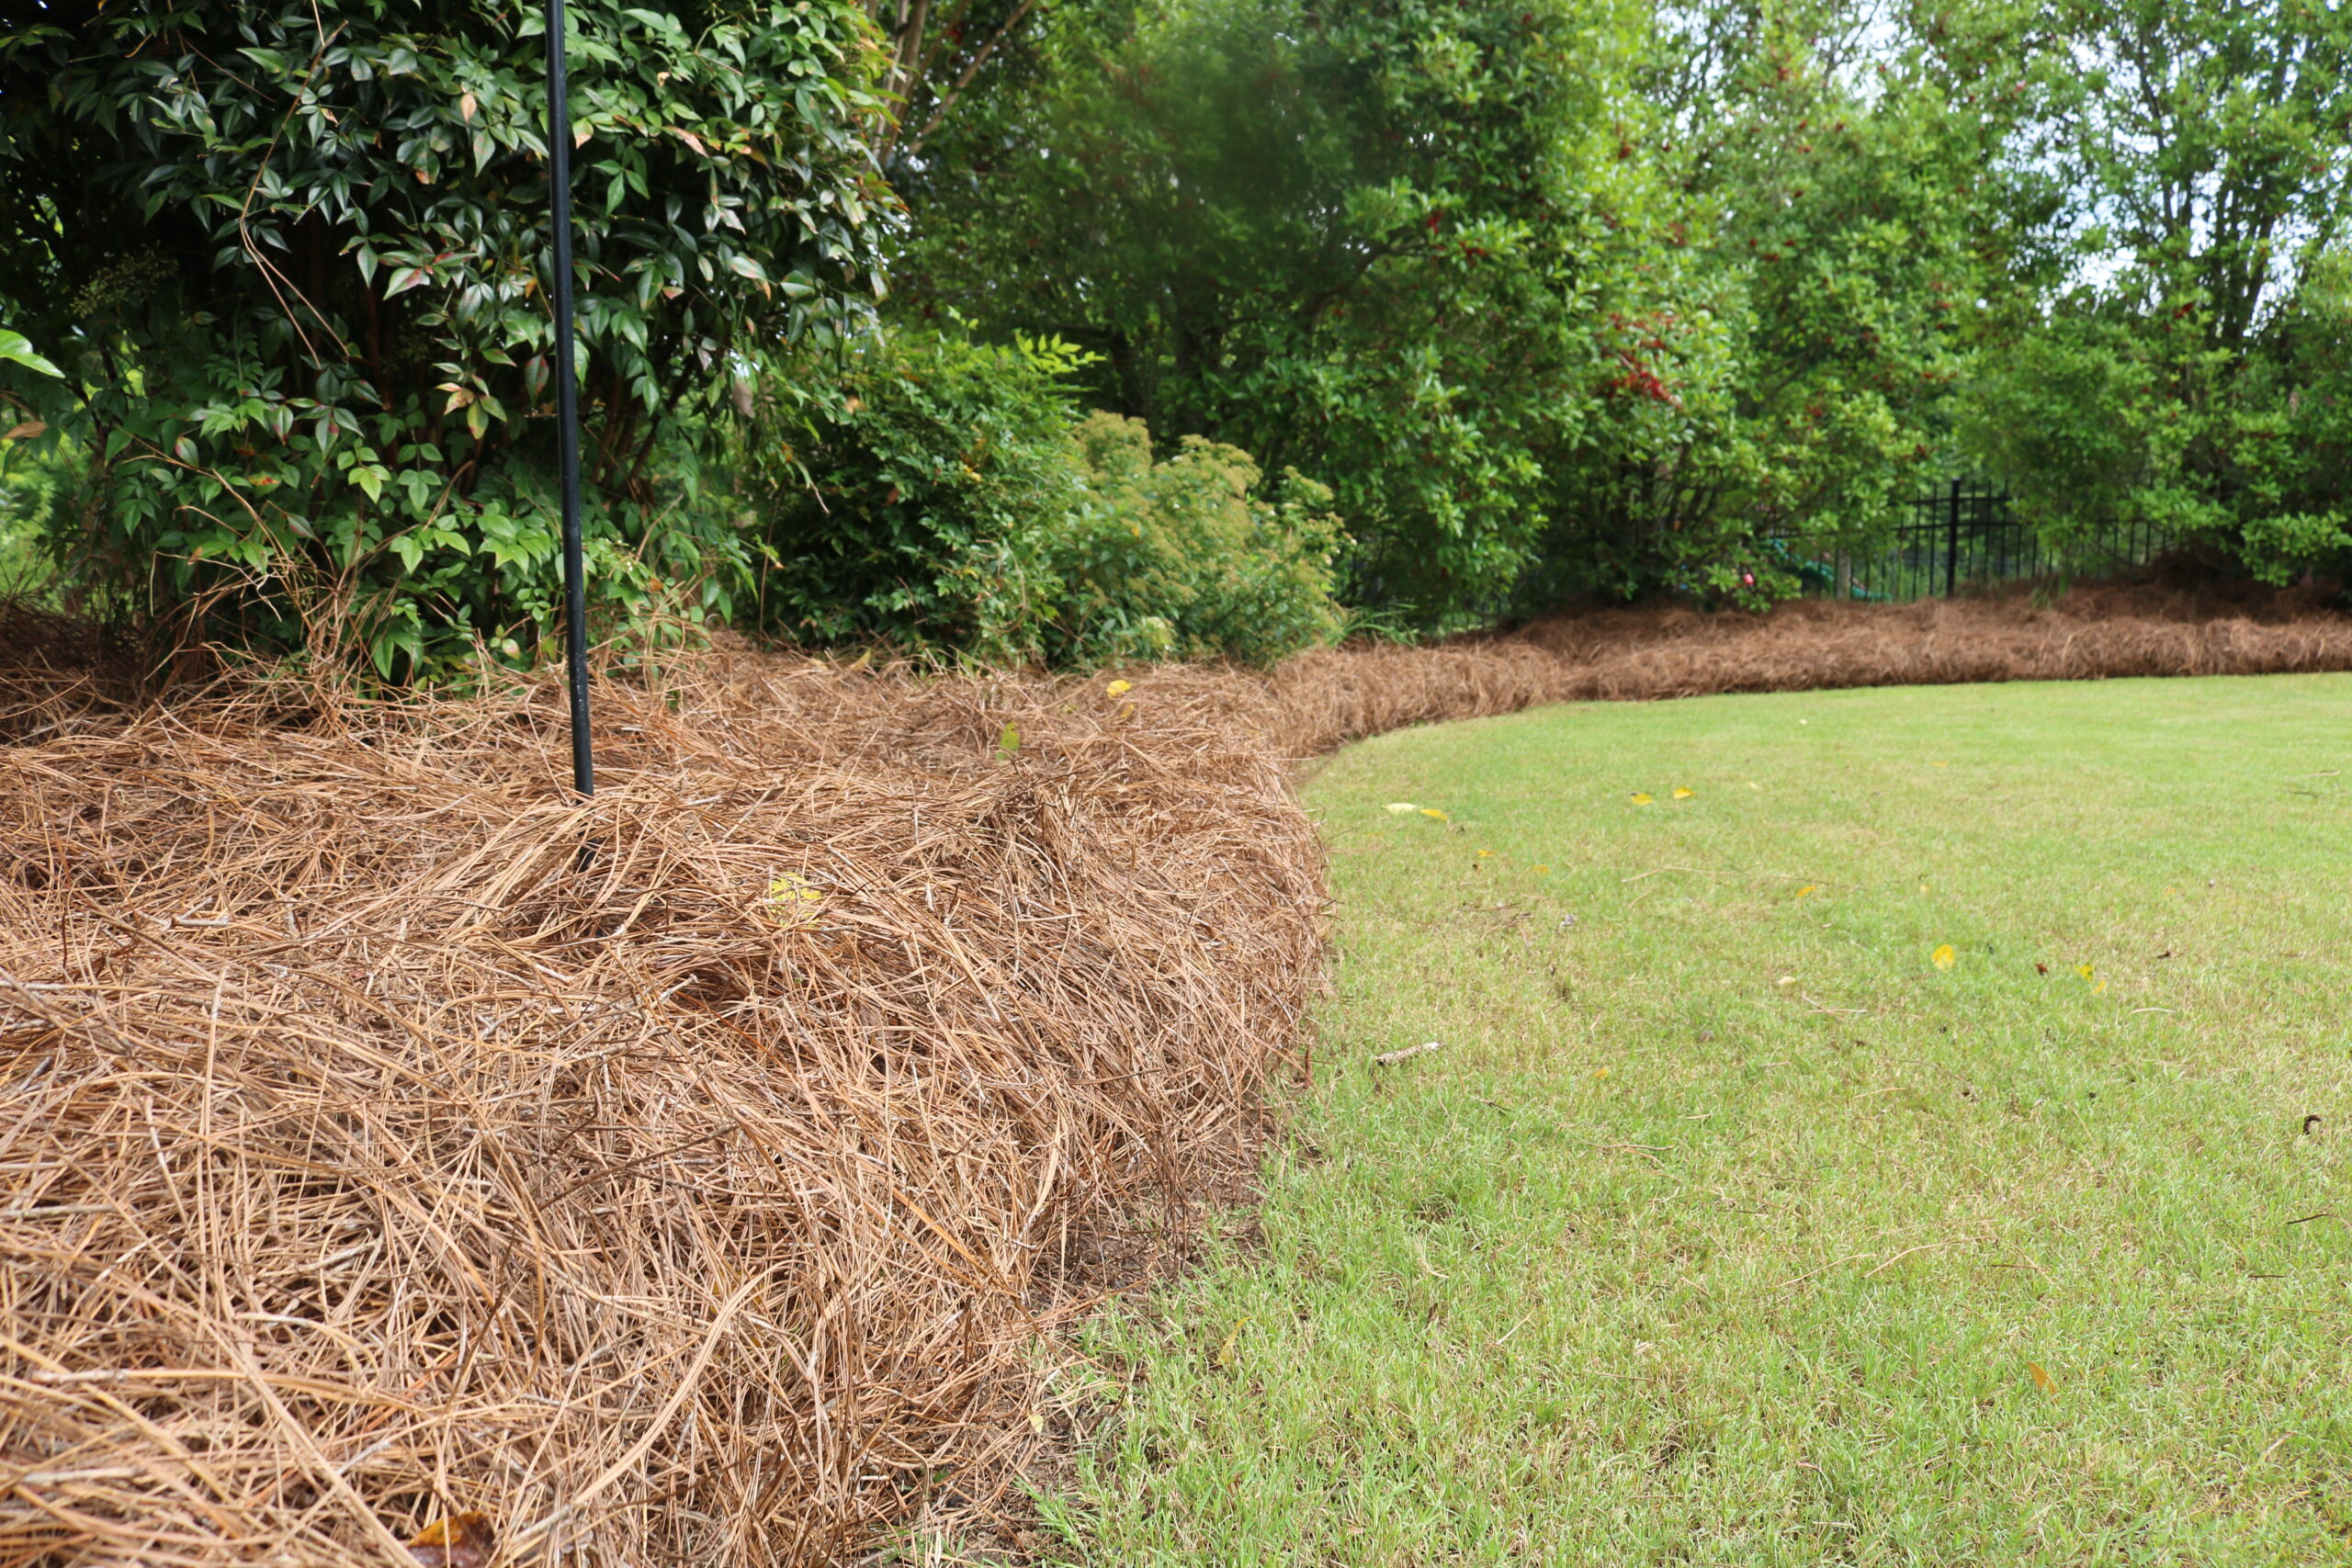 Neatly Installed Long Needle Pine Straw in Landscape - PSK